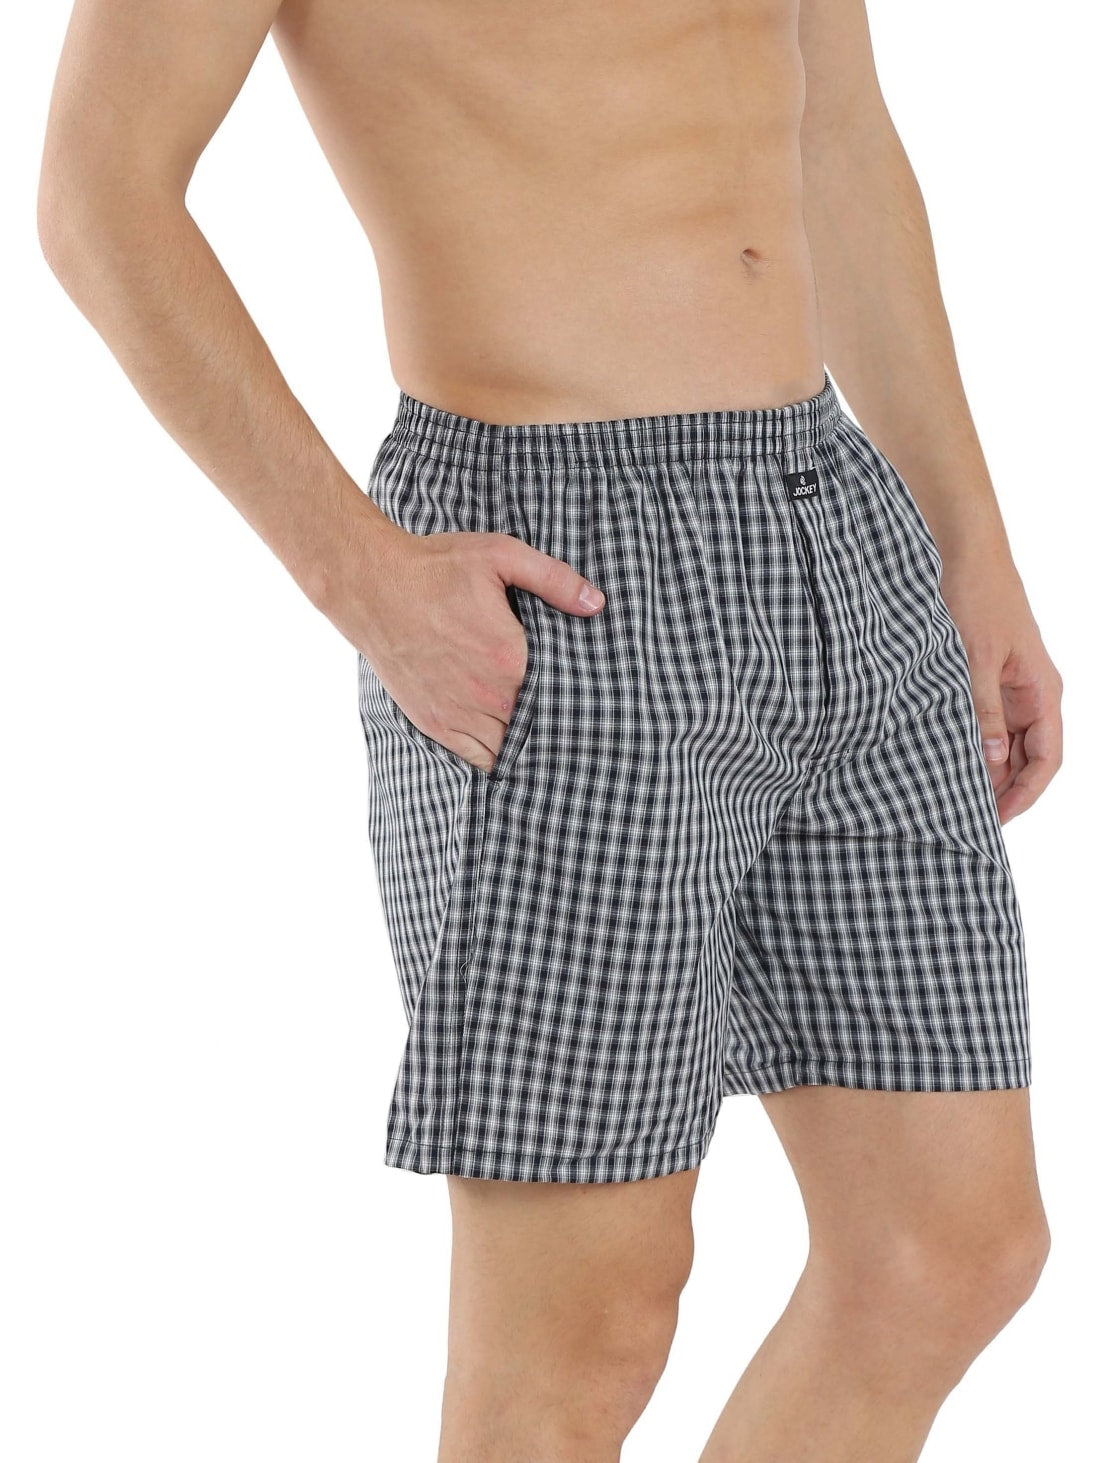 Jockey Assorted Boxer Shorts for Men #1223 [Pack of 2]